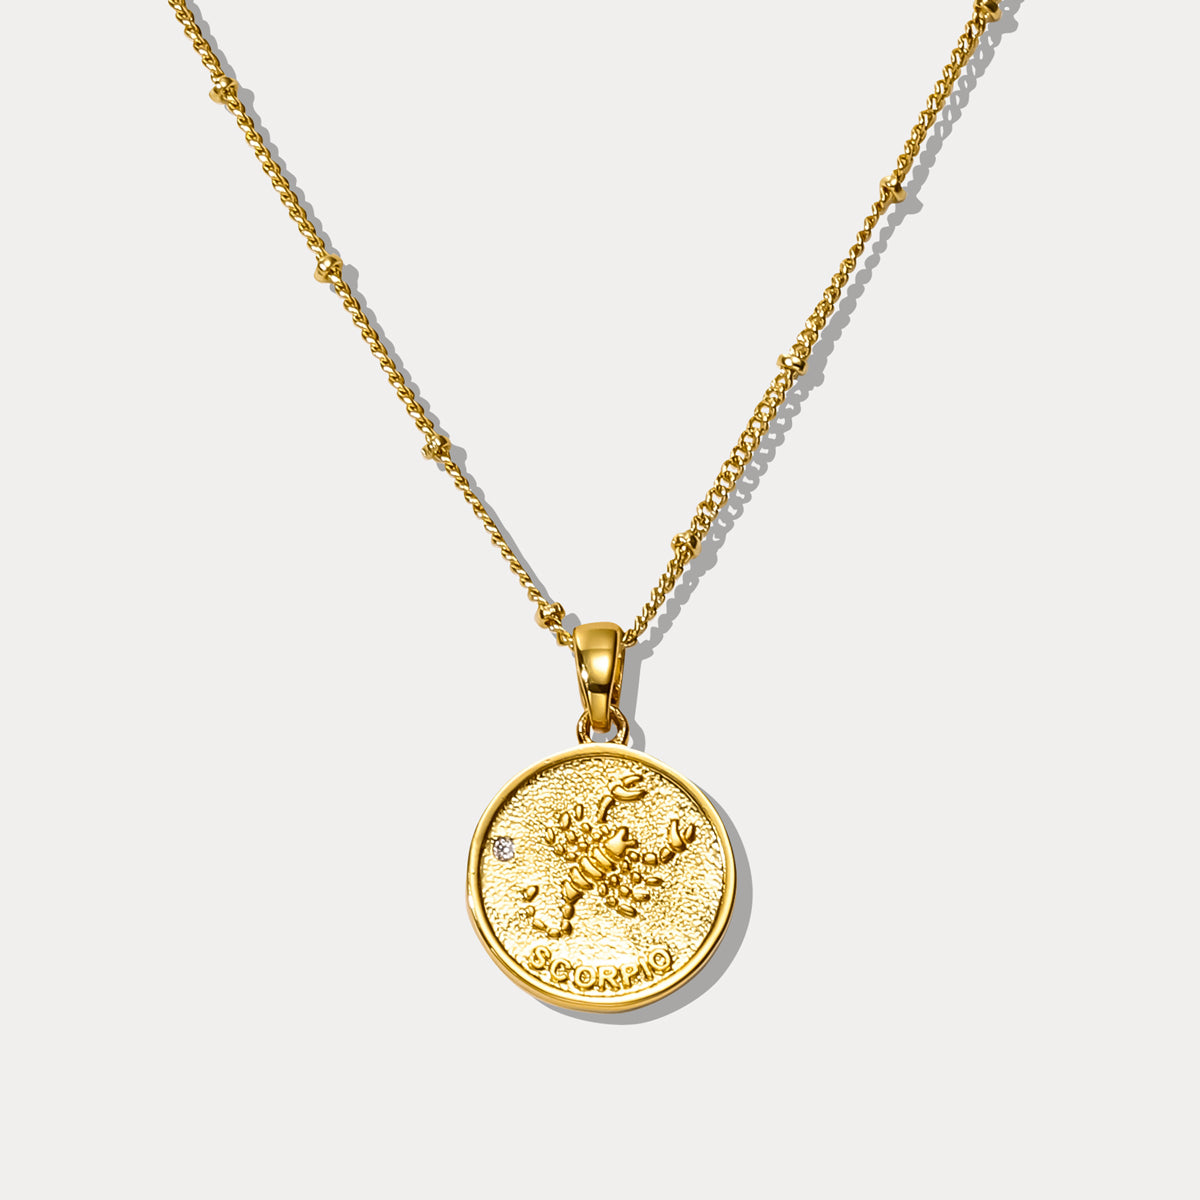 Scorpio Constellation Coin Pendant Necklace